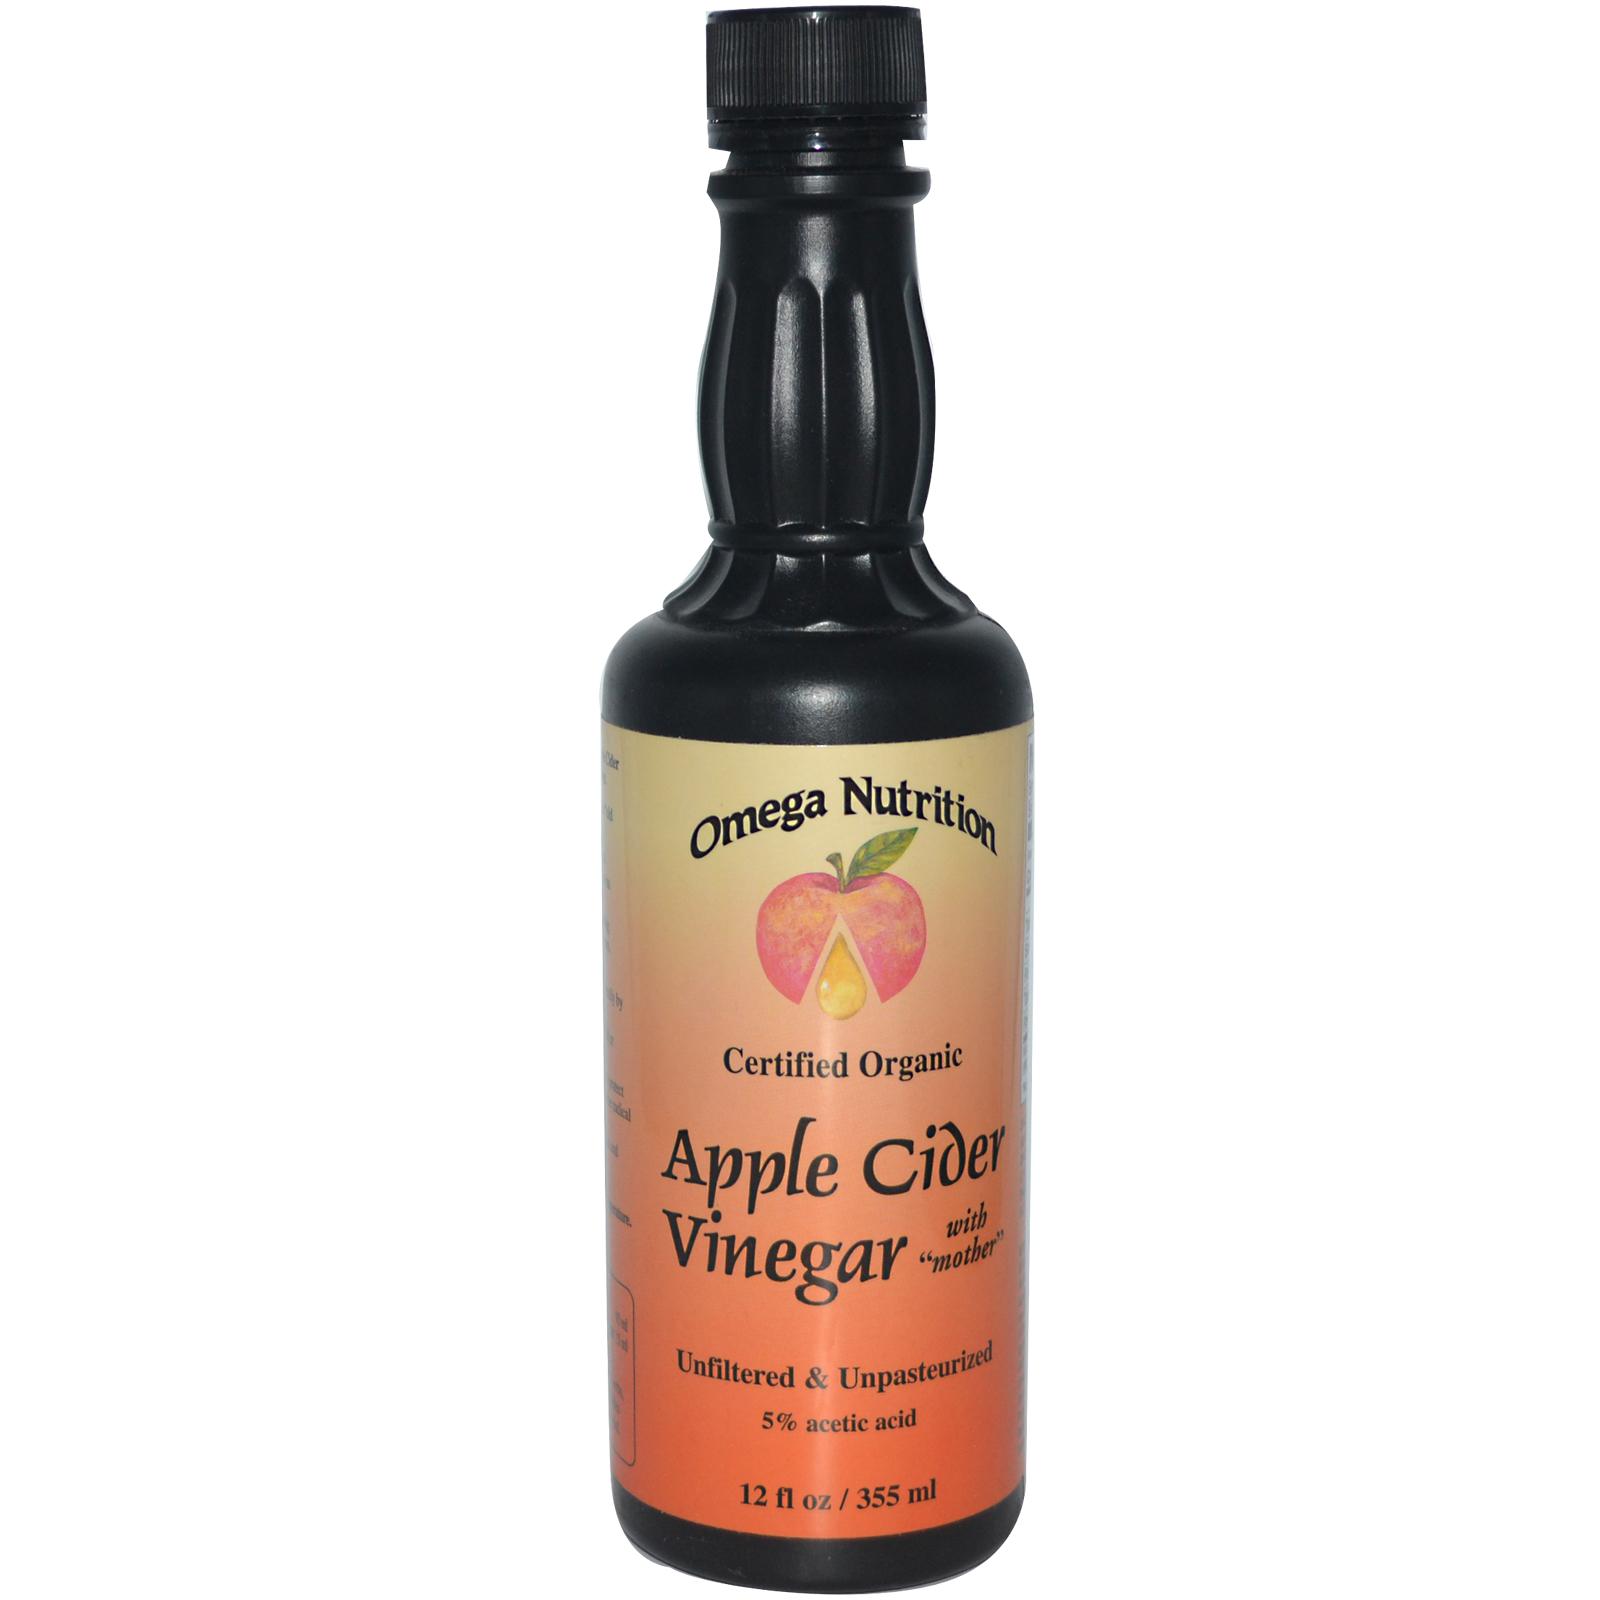 Omega Nutrition Apple Cider Vinegar $4.36